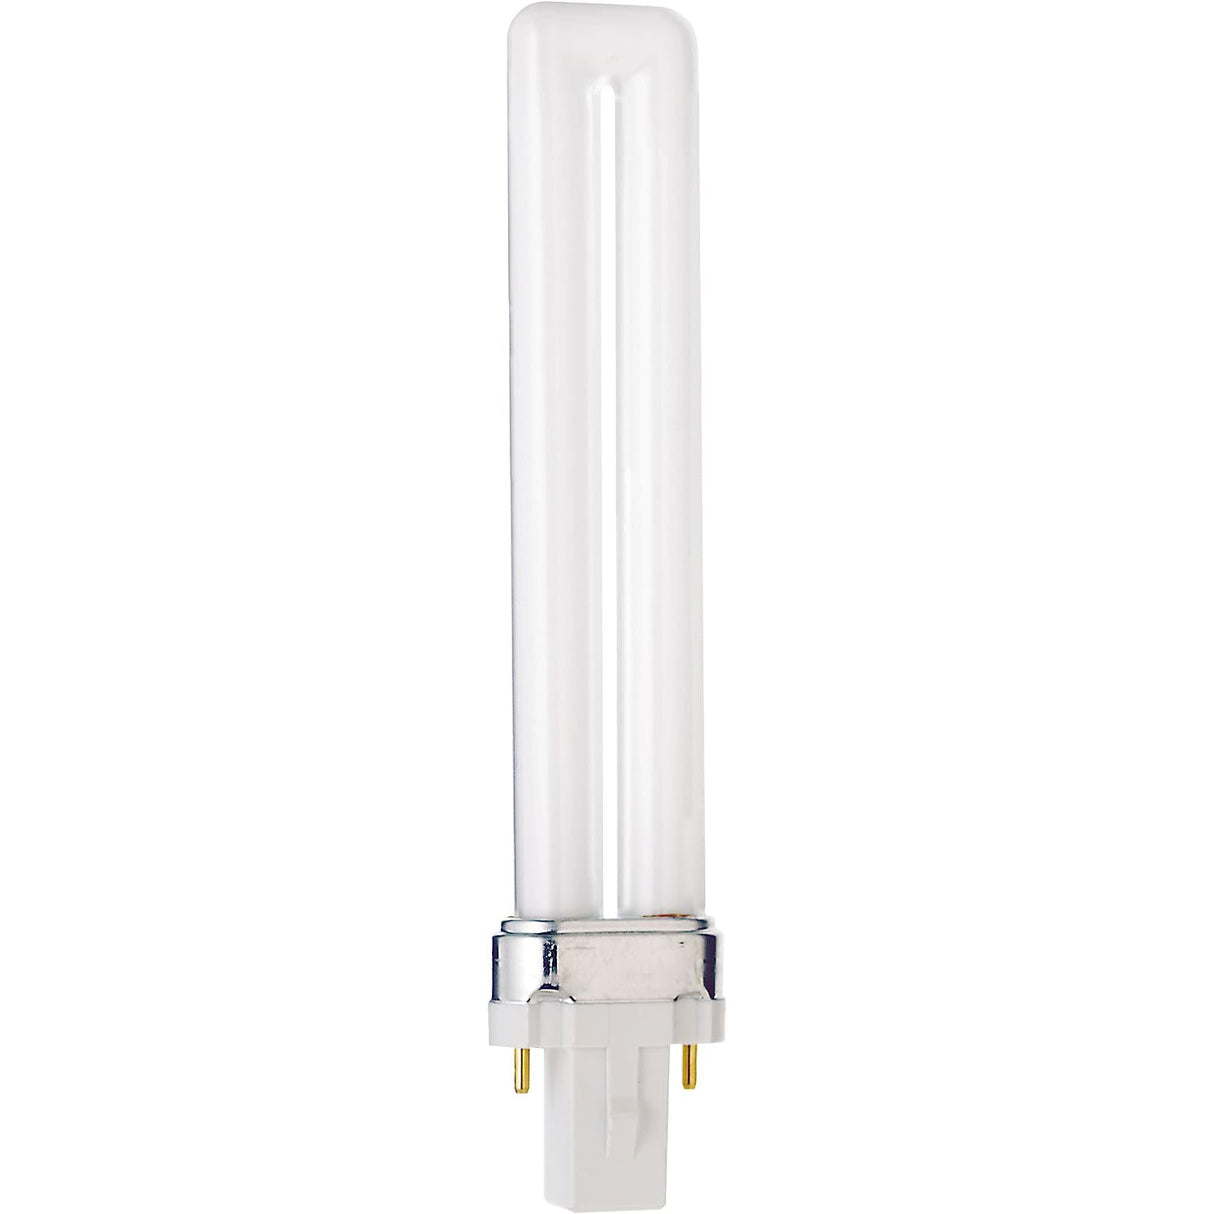 UV Chamber Replacement Lightbulb